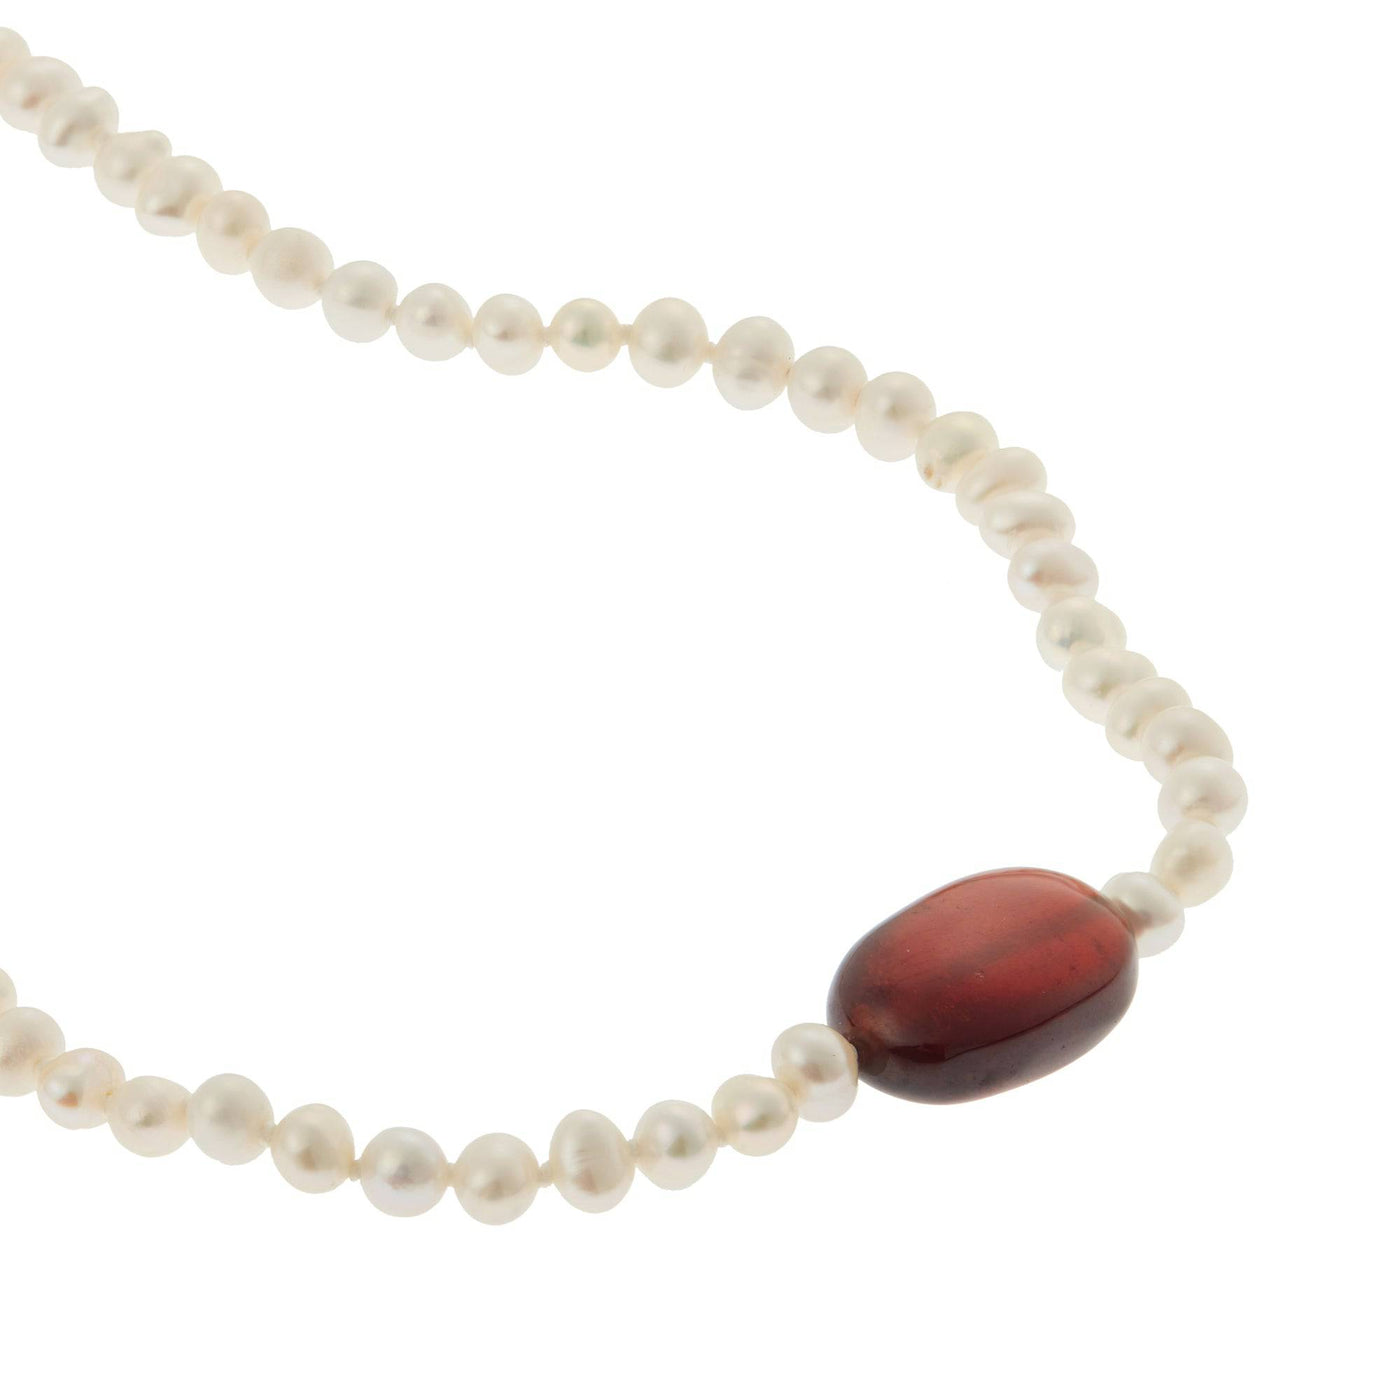 Hessonite Pearl Necklace (45cm) - Globetrotter - Ileana Makri store